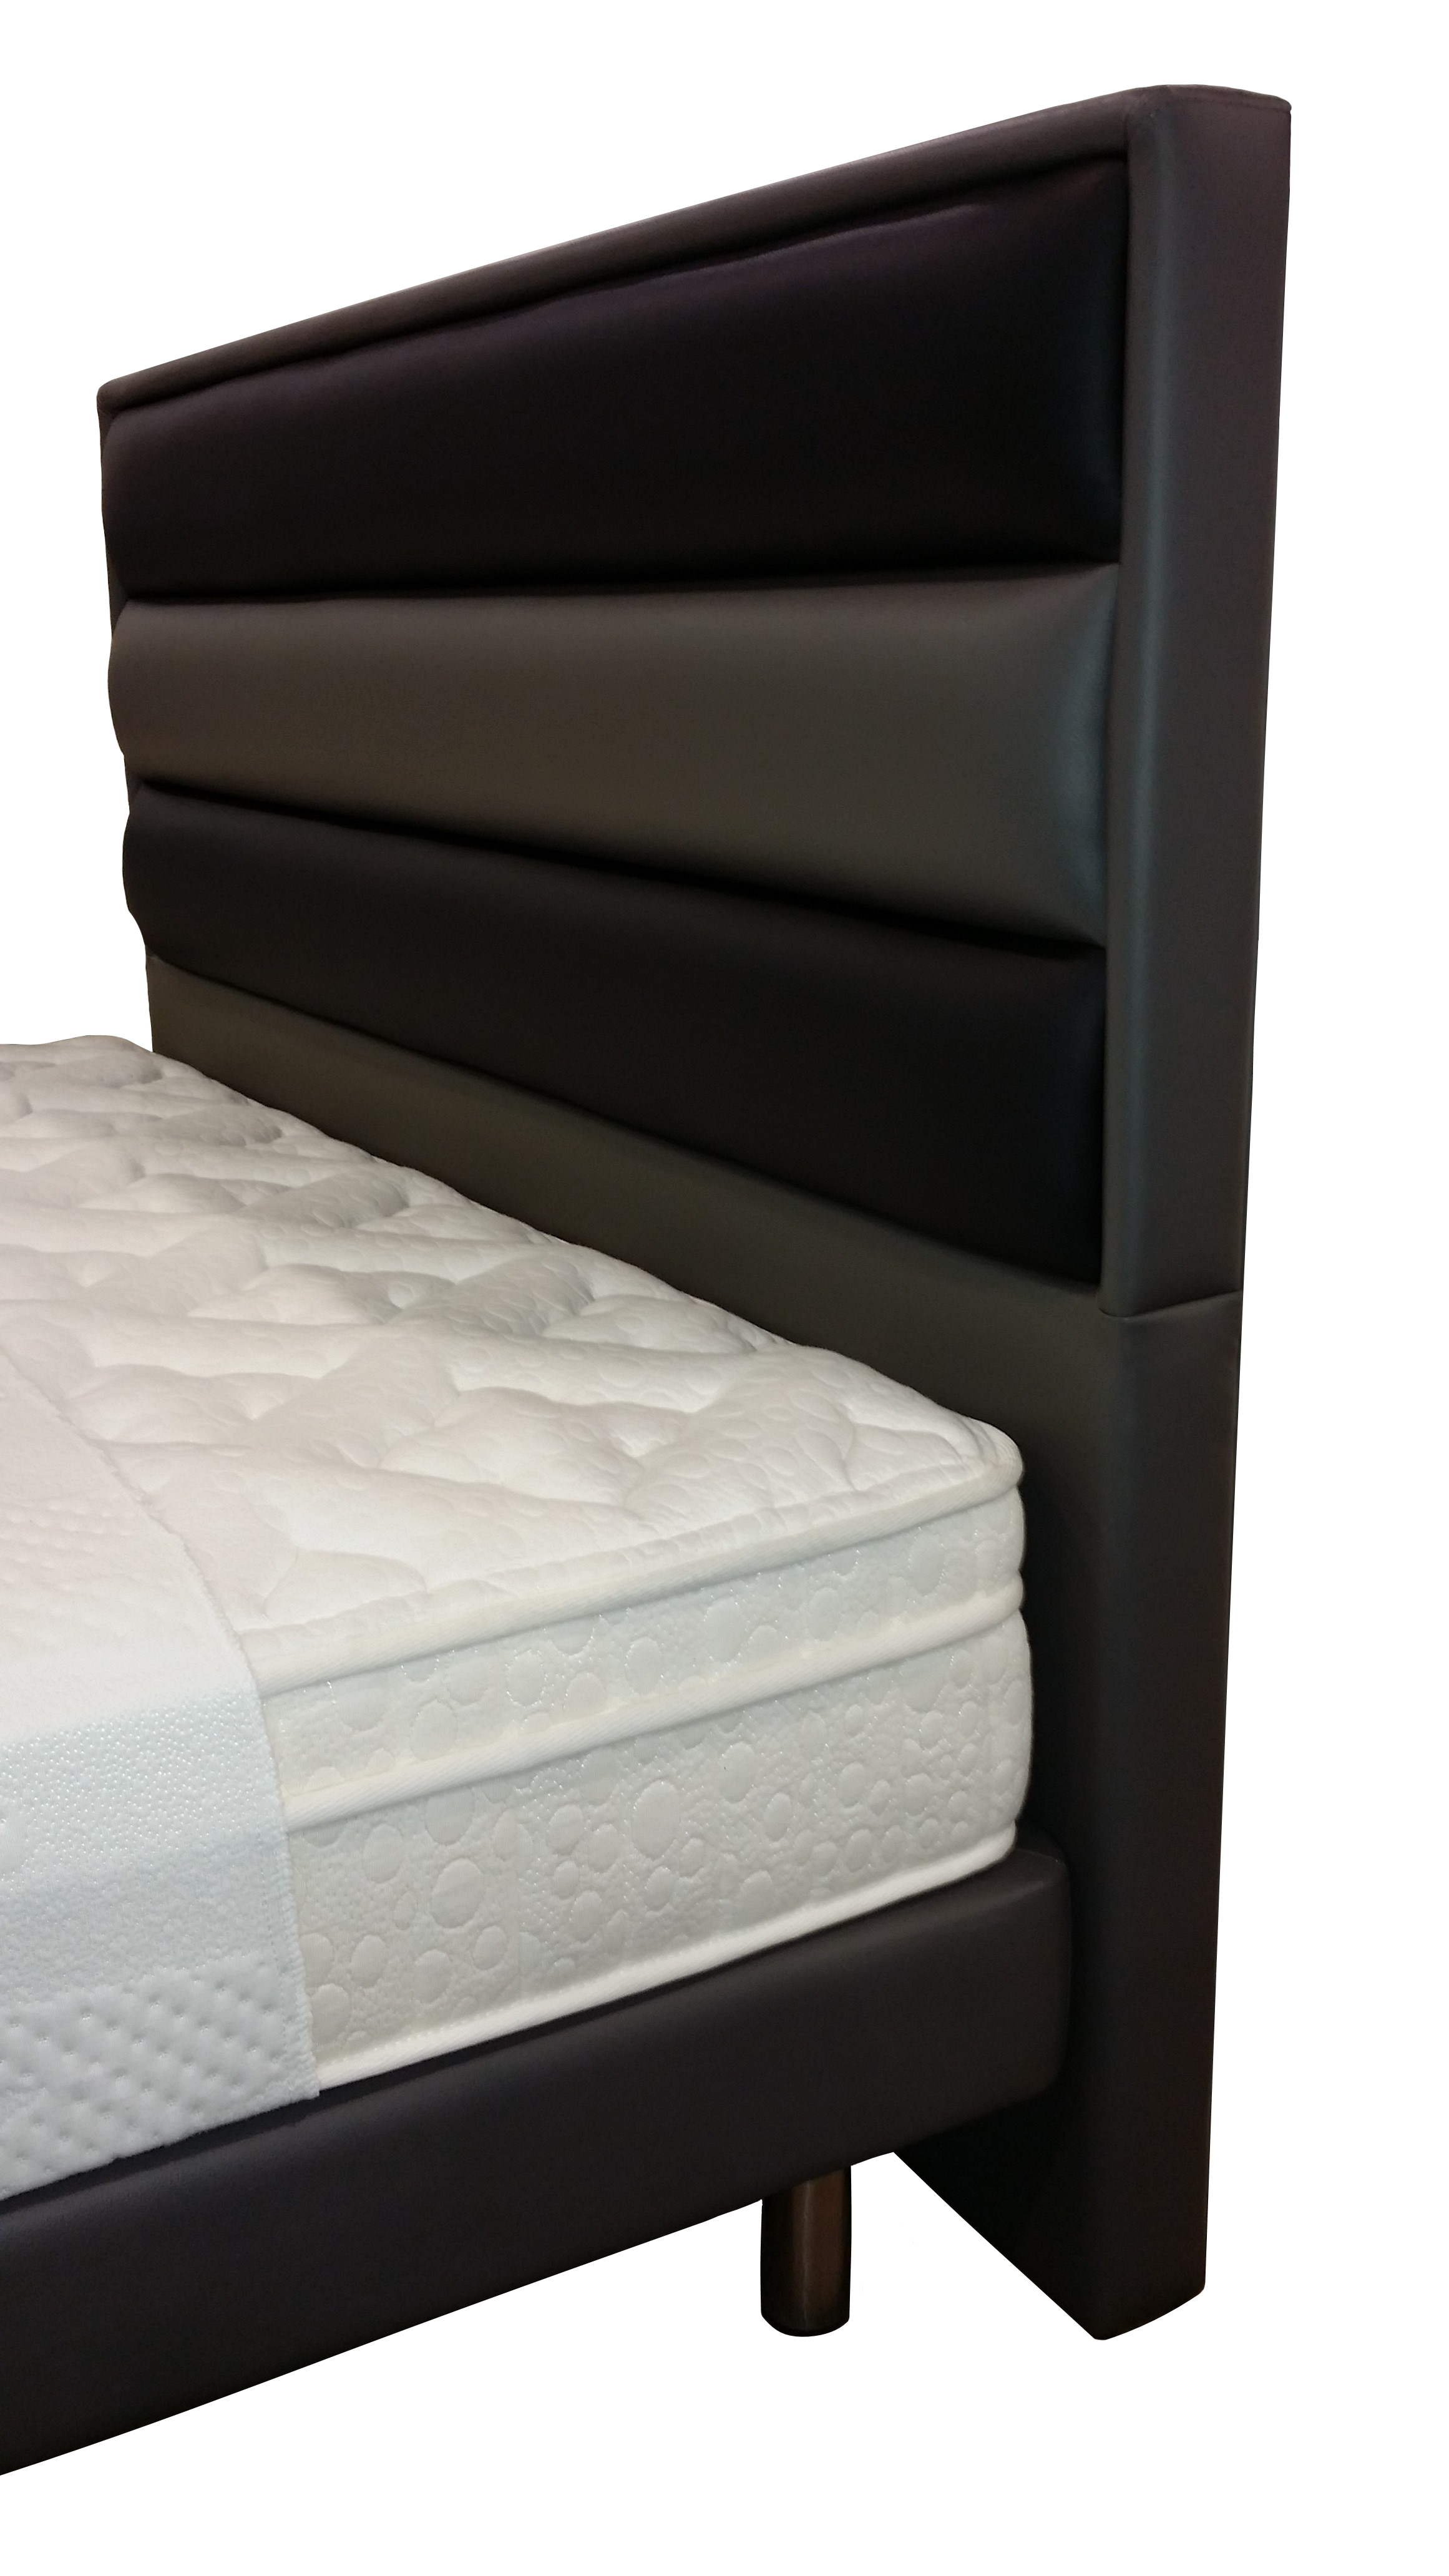 Larvin Divan Contemporary Bed Frame